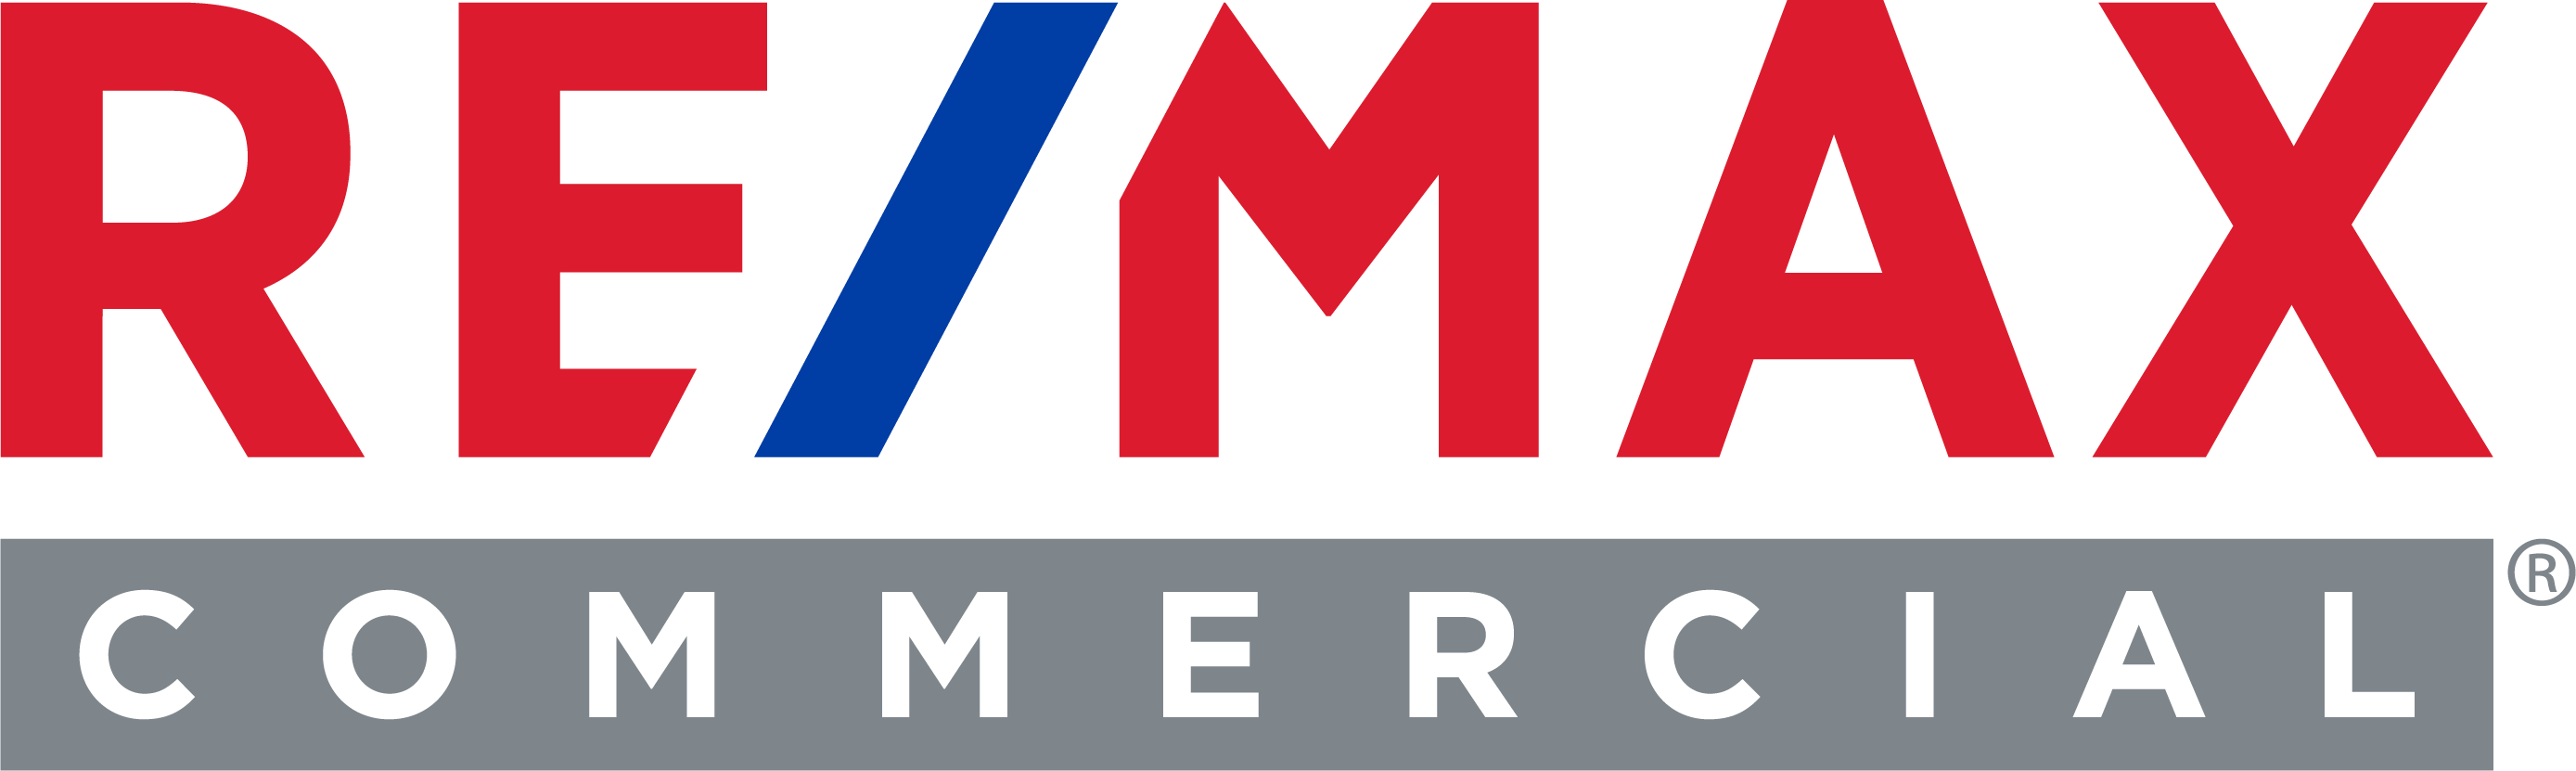 remax-site-logo